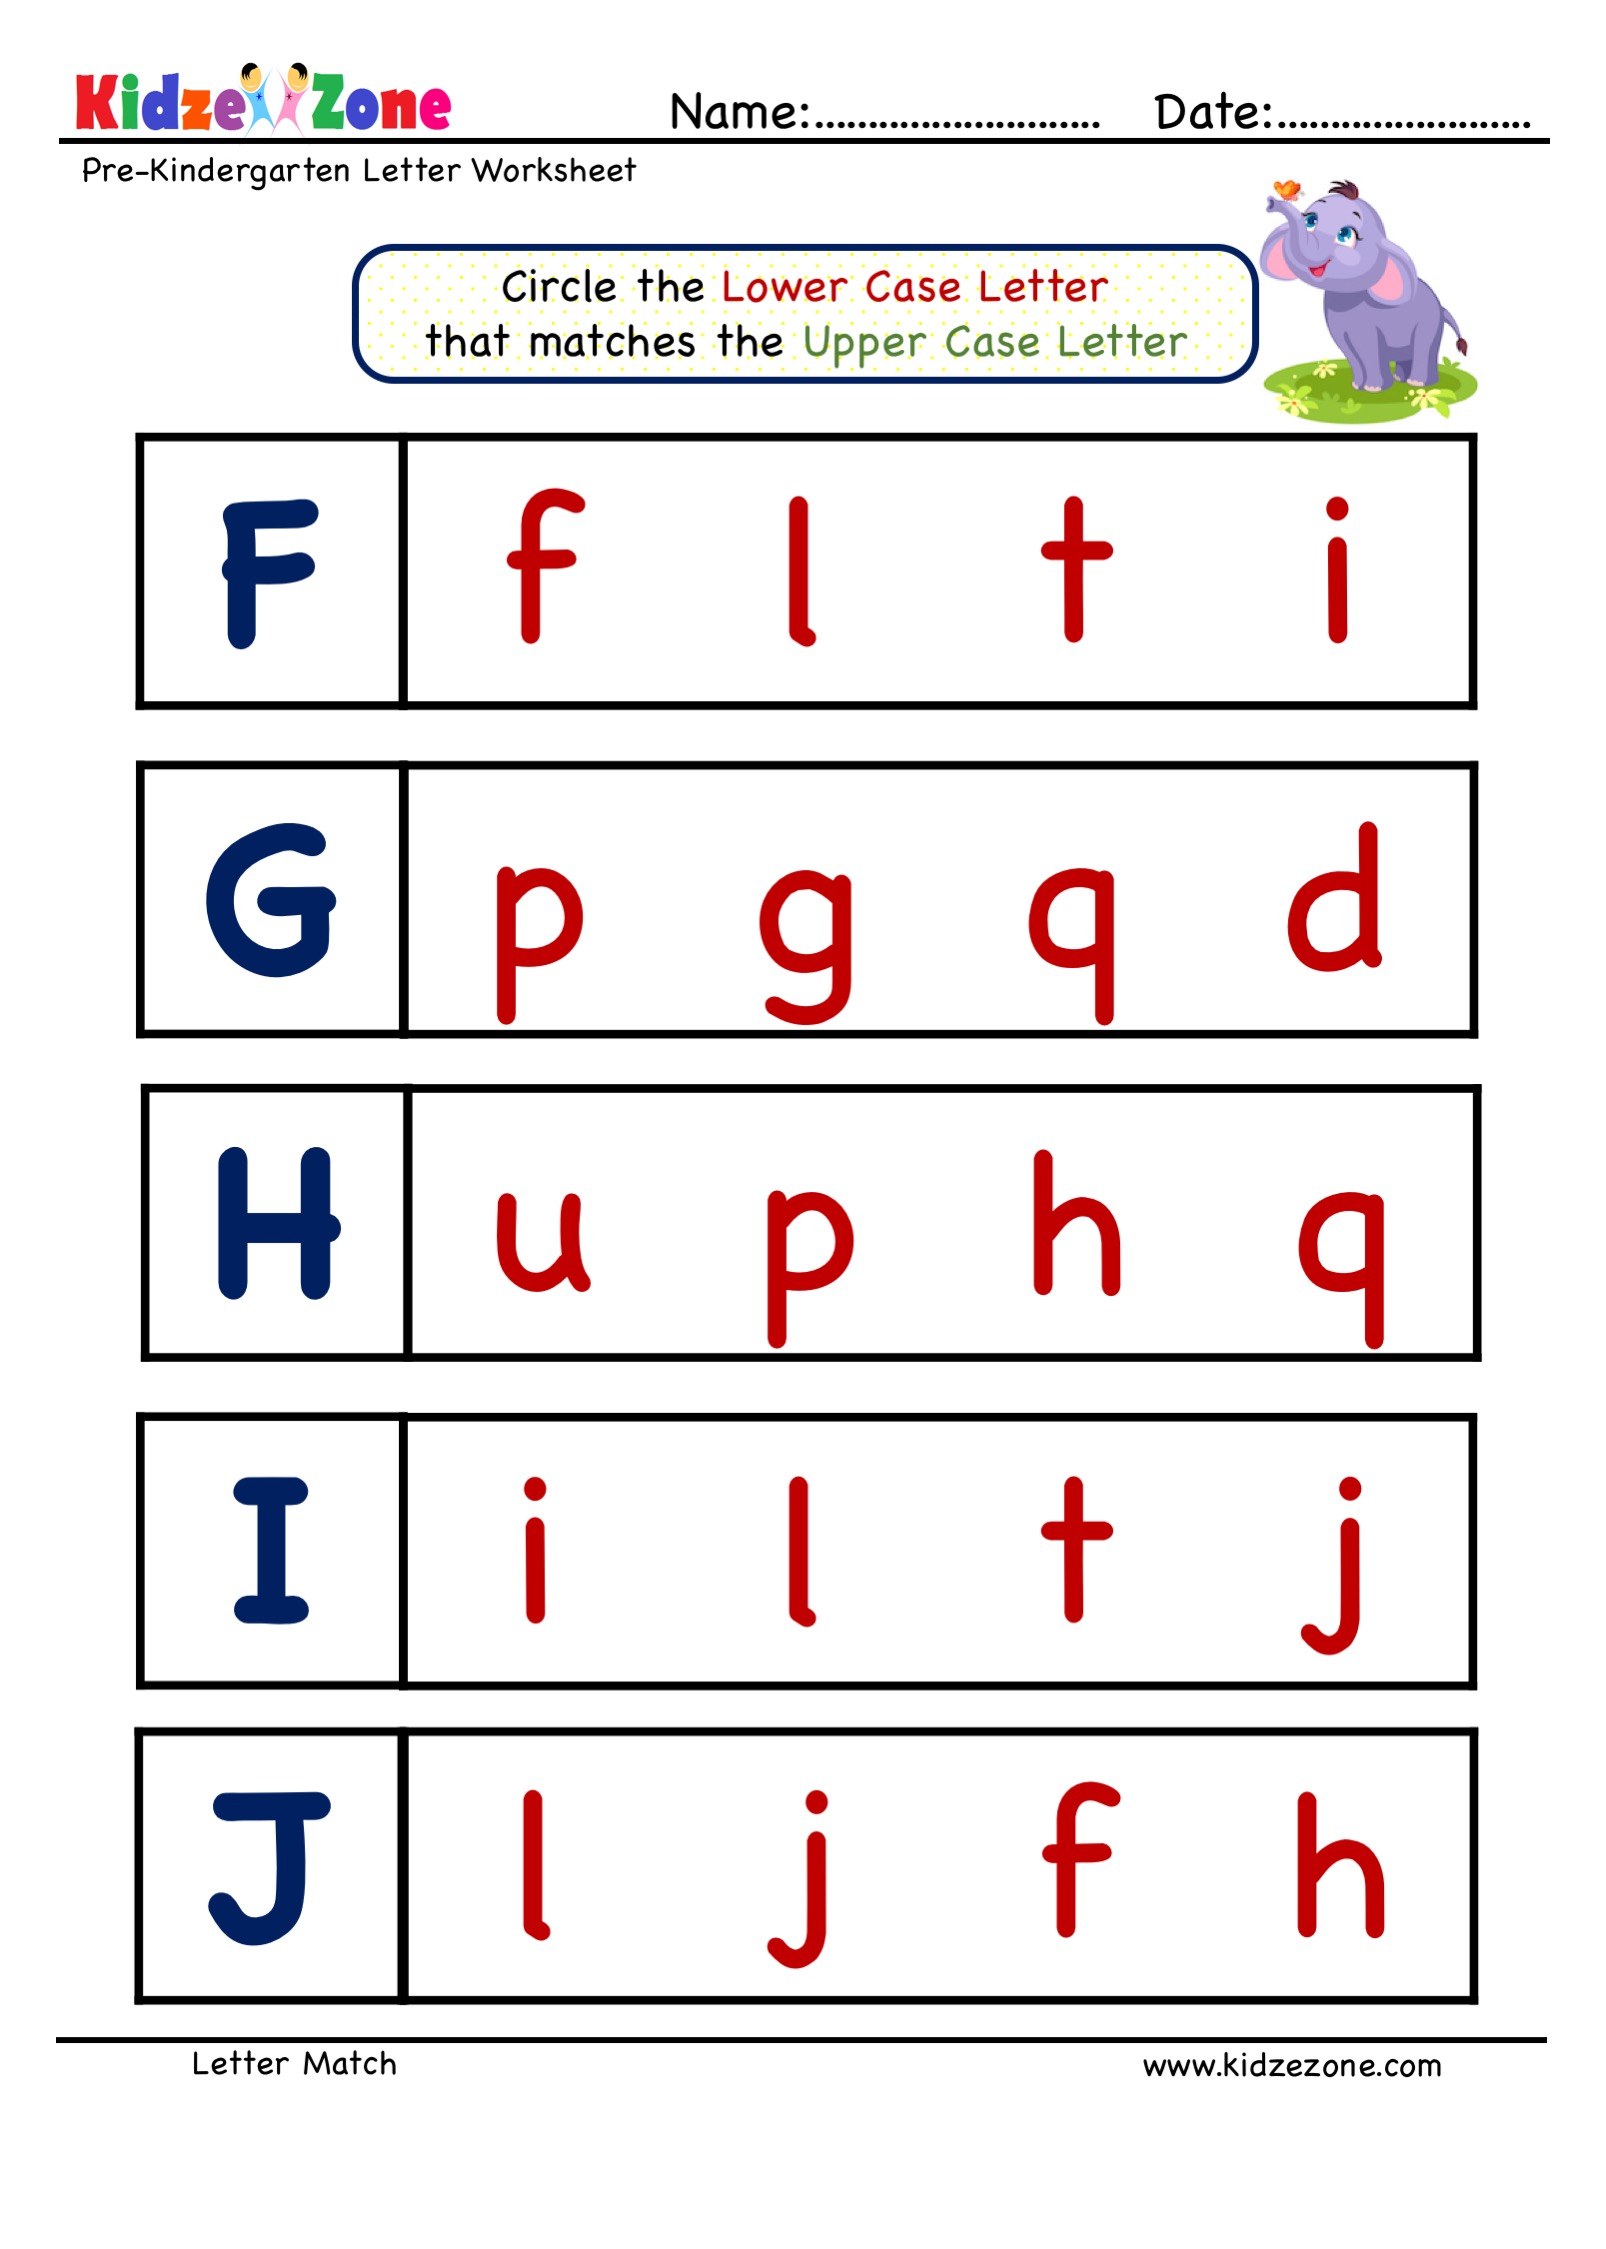 preschool-letter-matching-upper-case-to-lower-case-worksheet-1